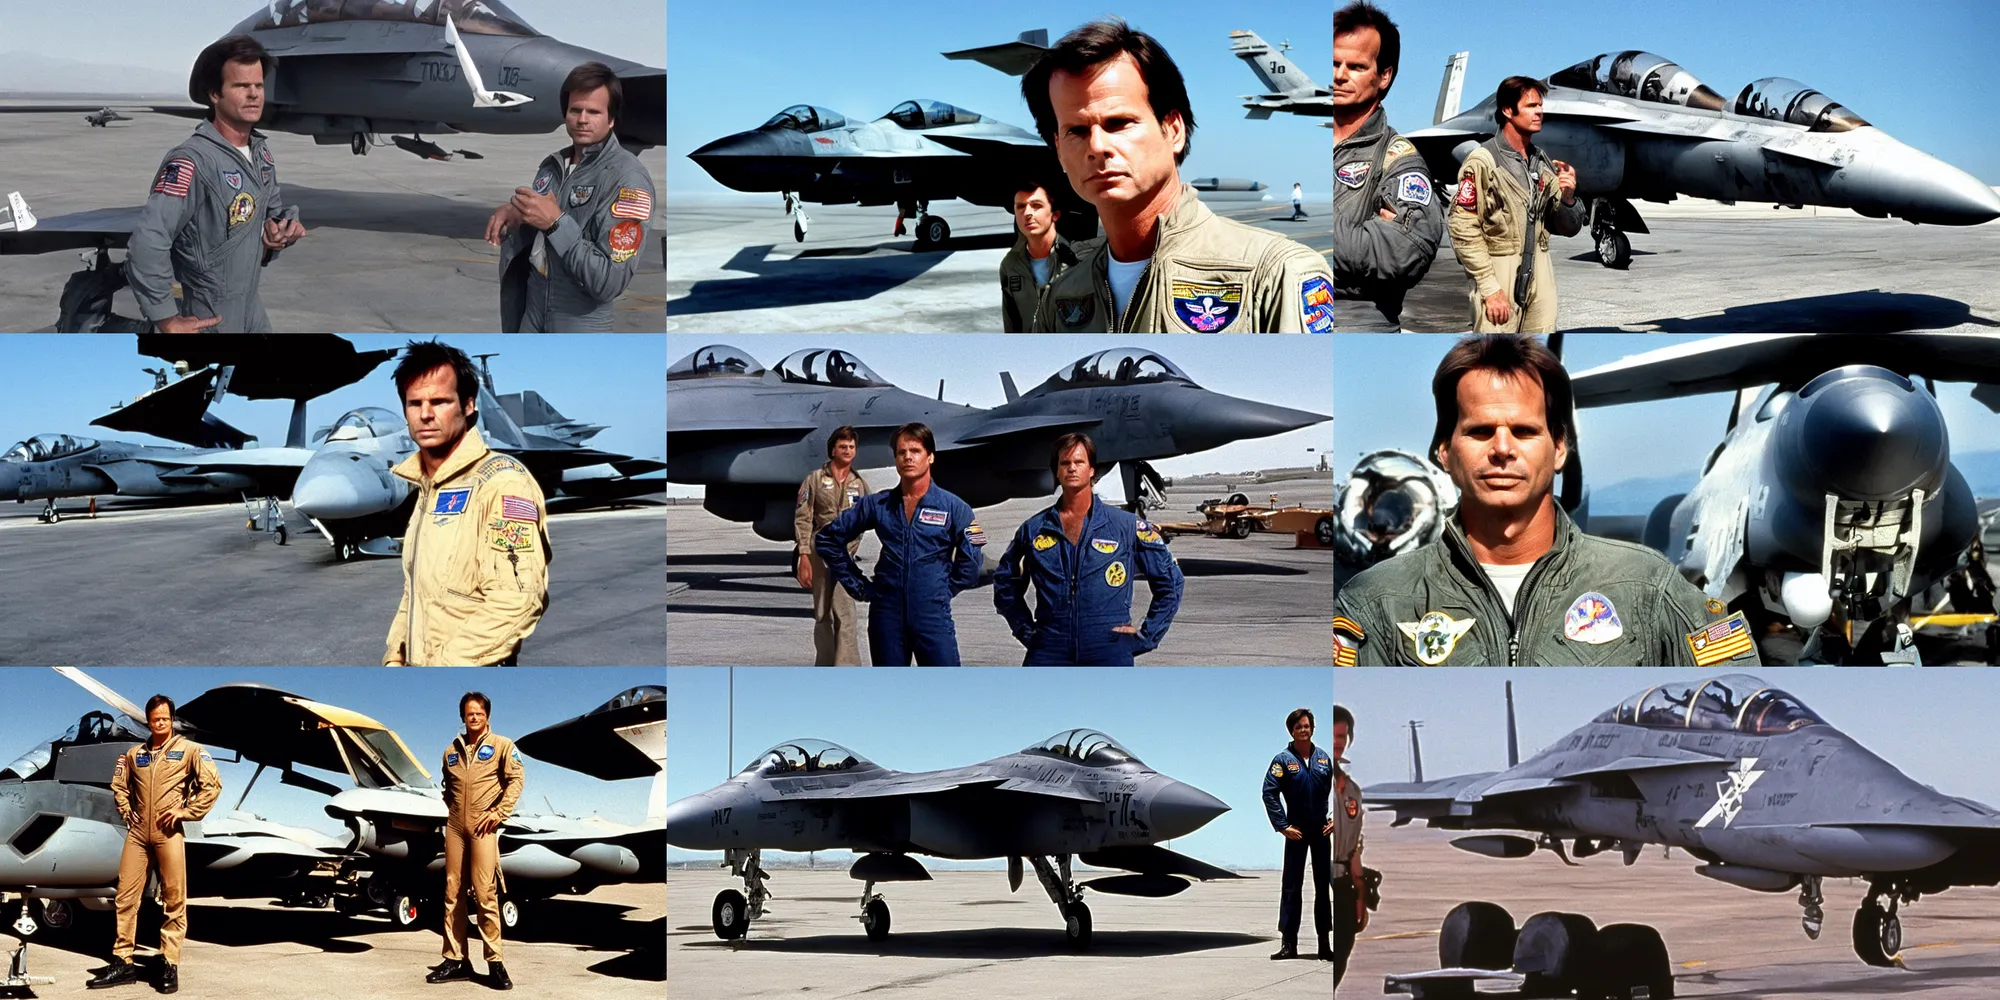 Prompt: Portrait (30 year old Bill Paxton) standing next to an F14 plane, film still from Top Gun 1986